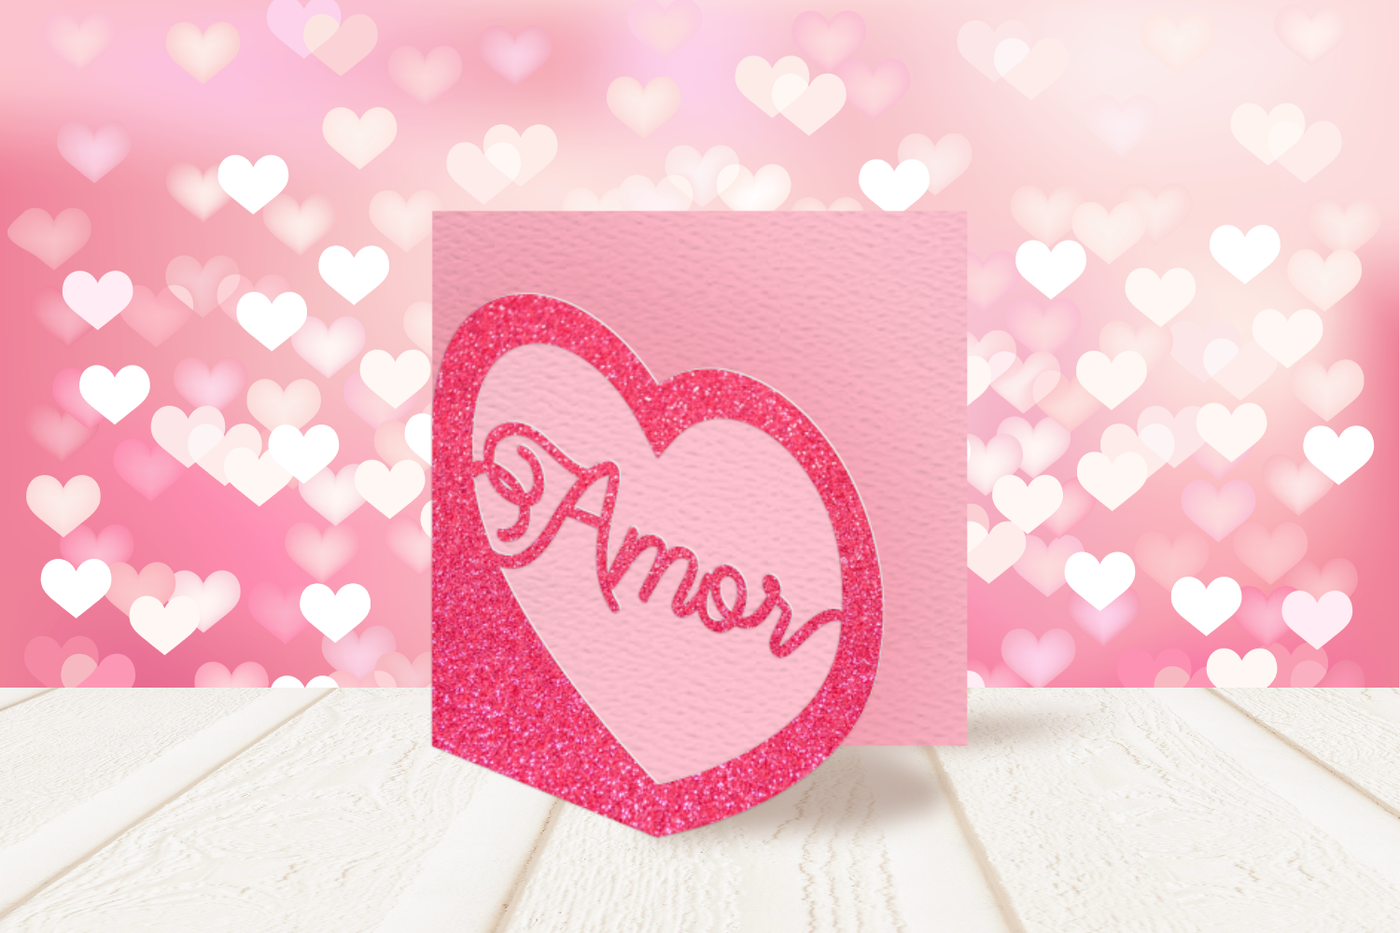 Amor heart card design